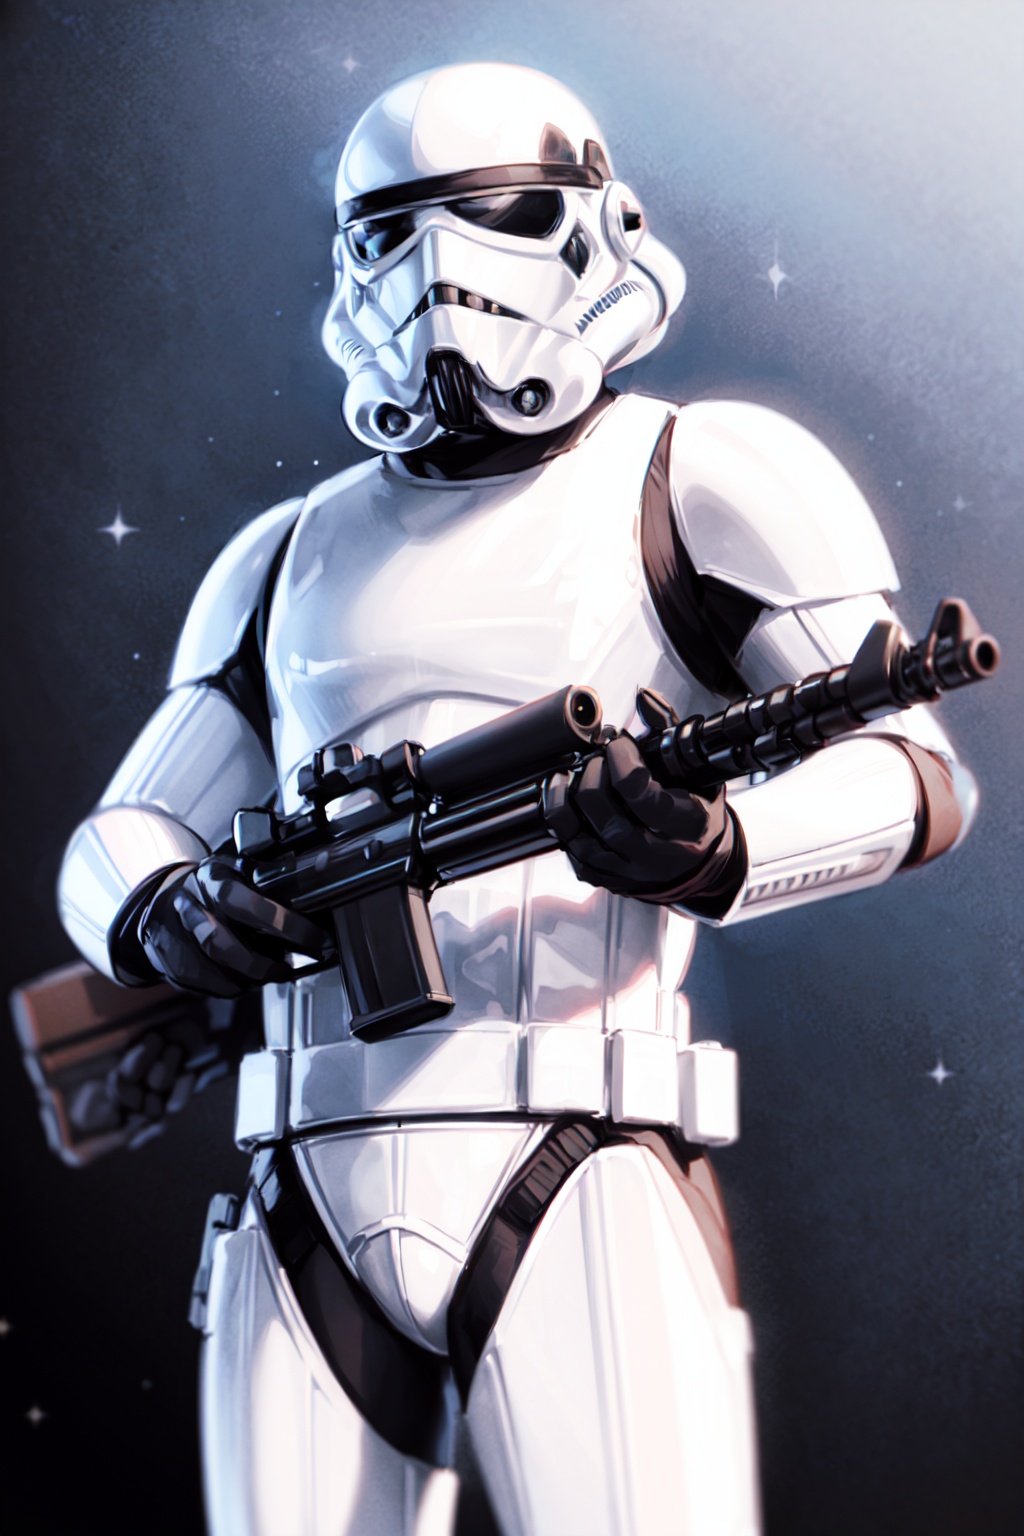 storm trooper, helmet, white armor, science fiction, star wars, pose, gun, rifle